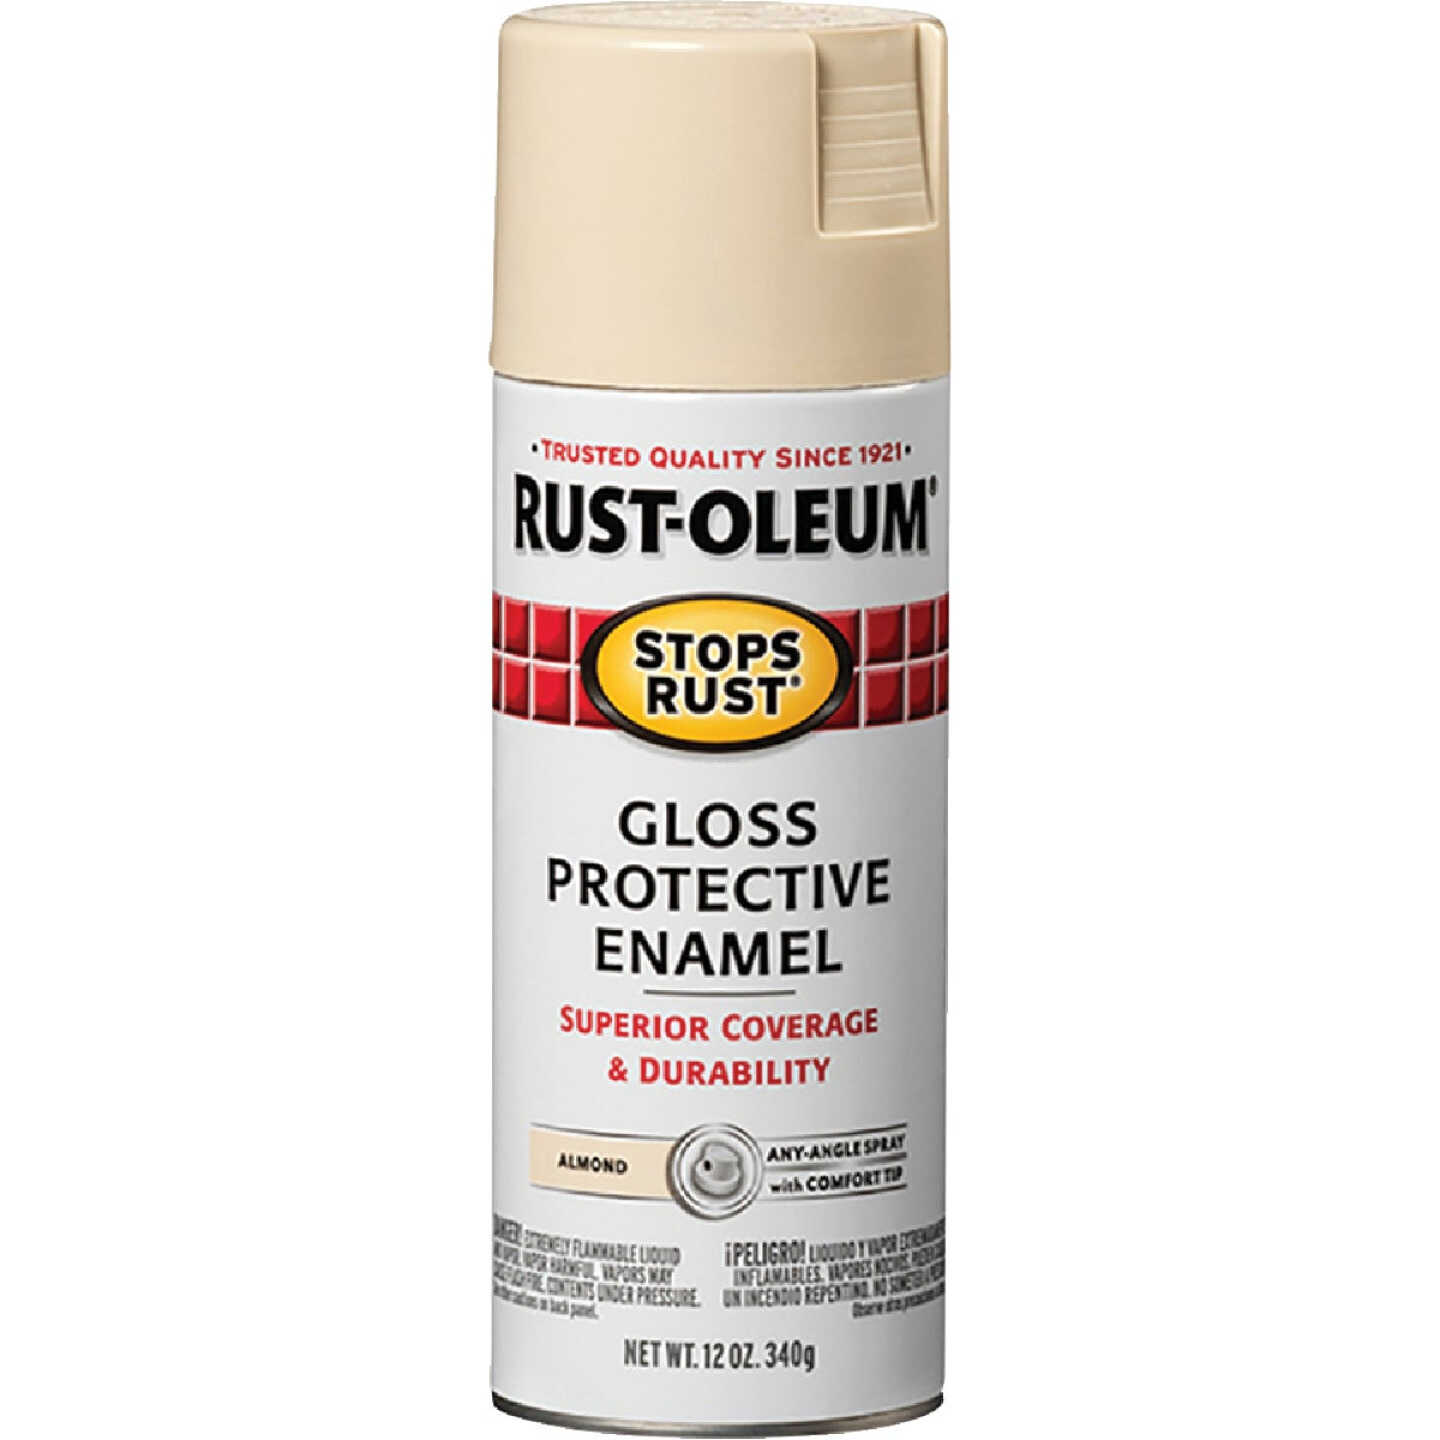 Rust-Oleum Stops Rust Semi-Gloss Anodized Bronze 12 Oz. Anti-Rust